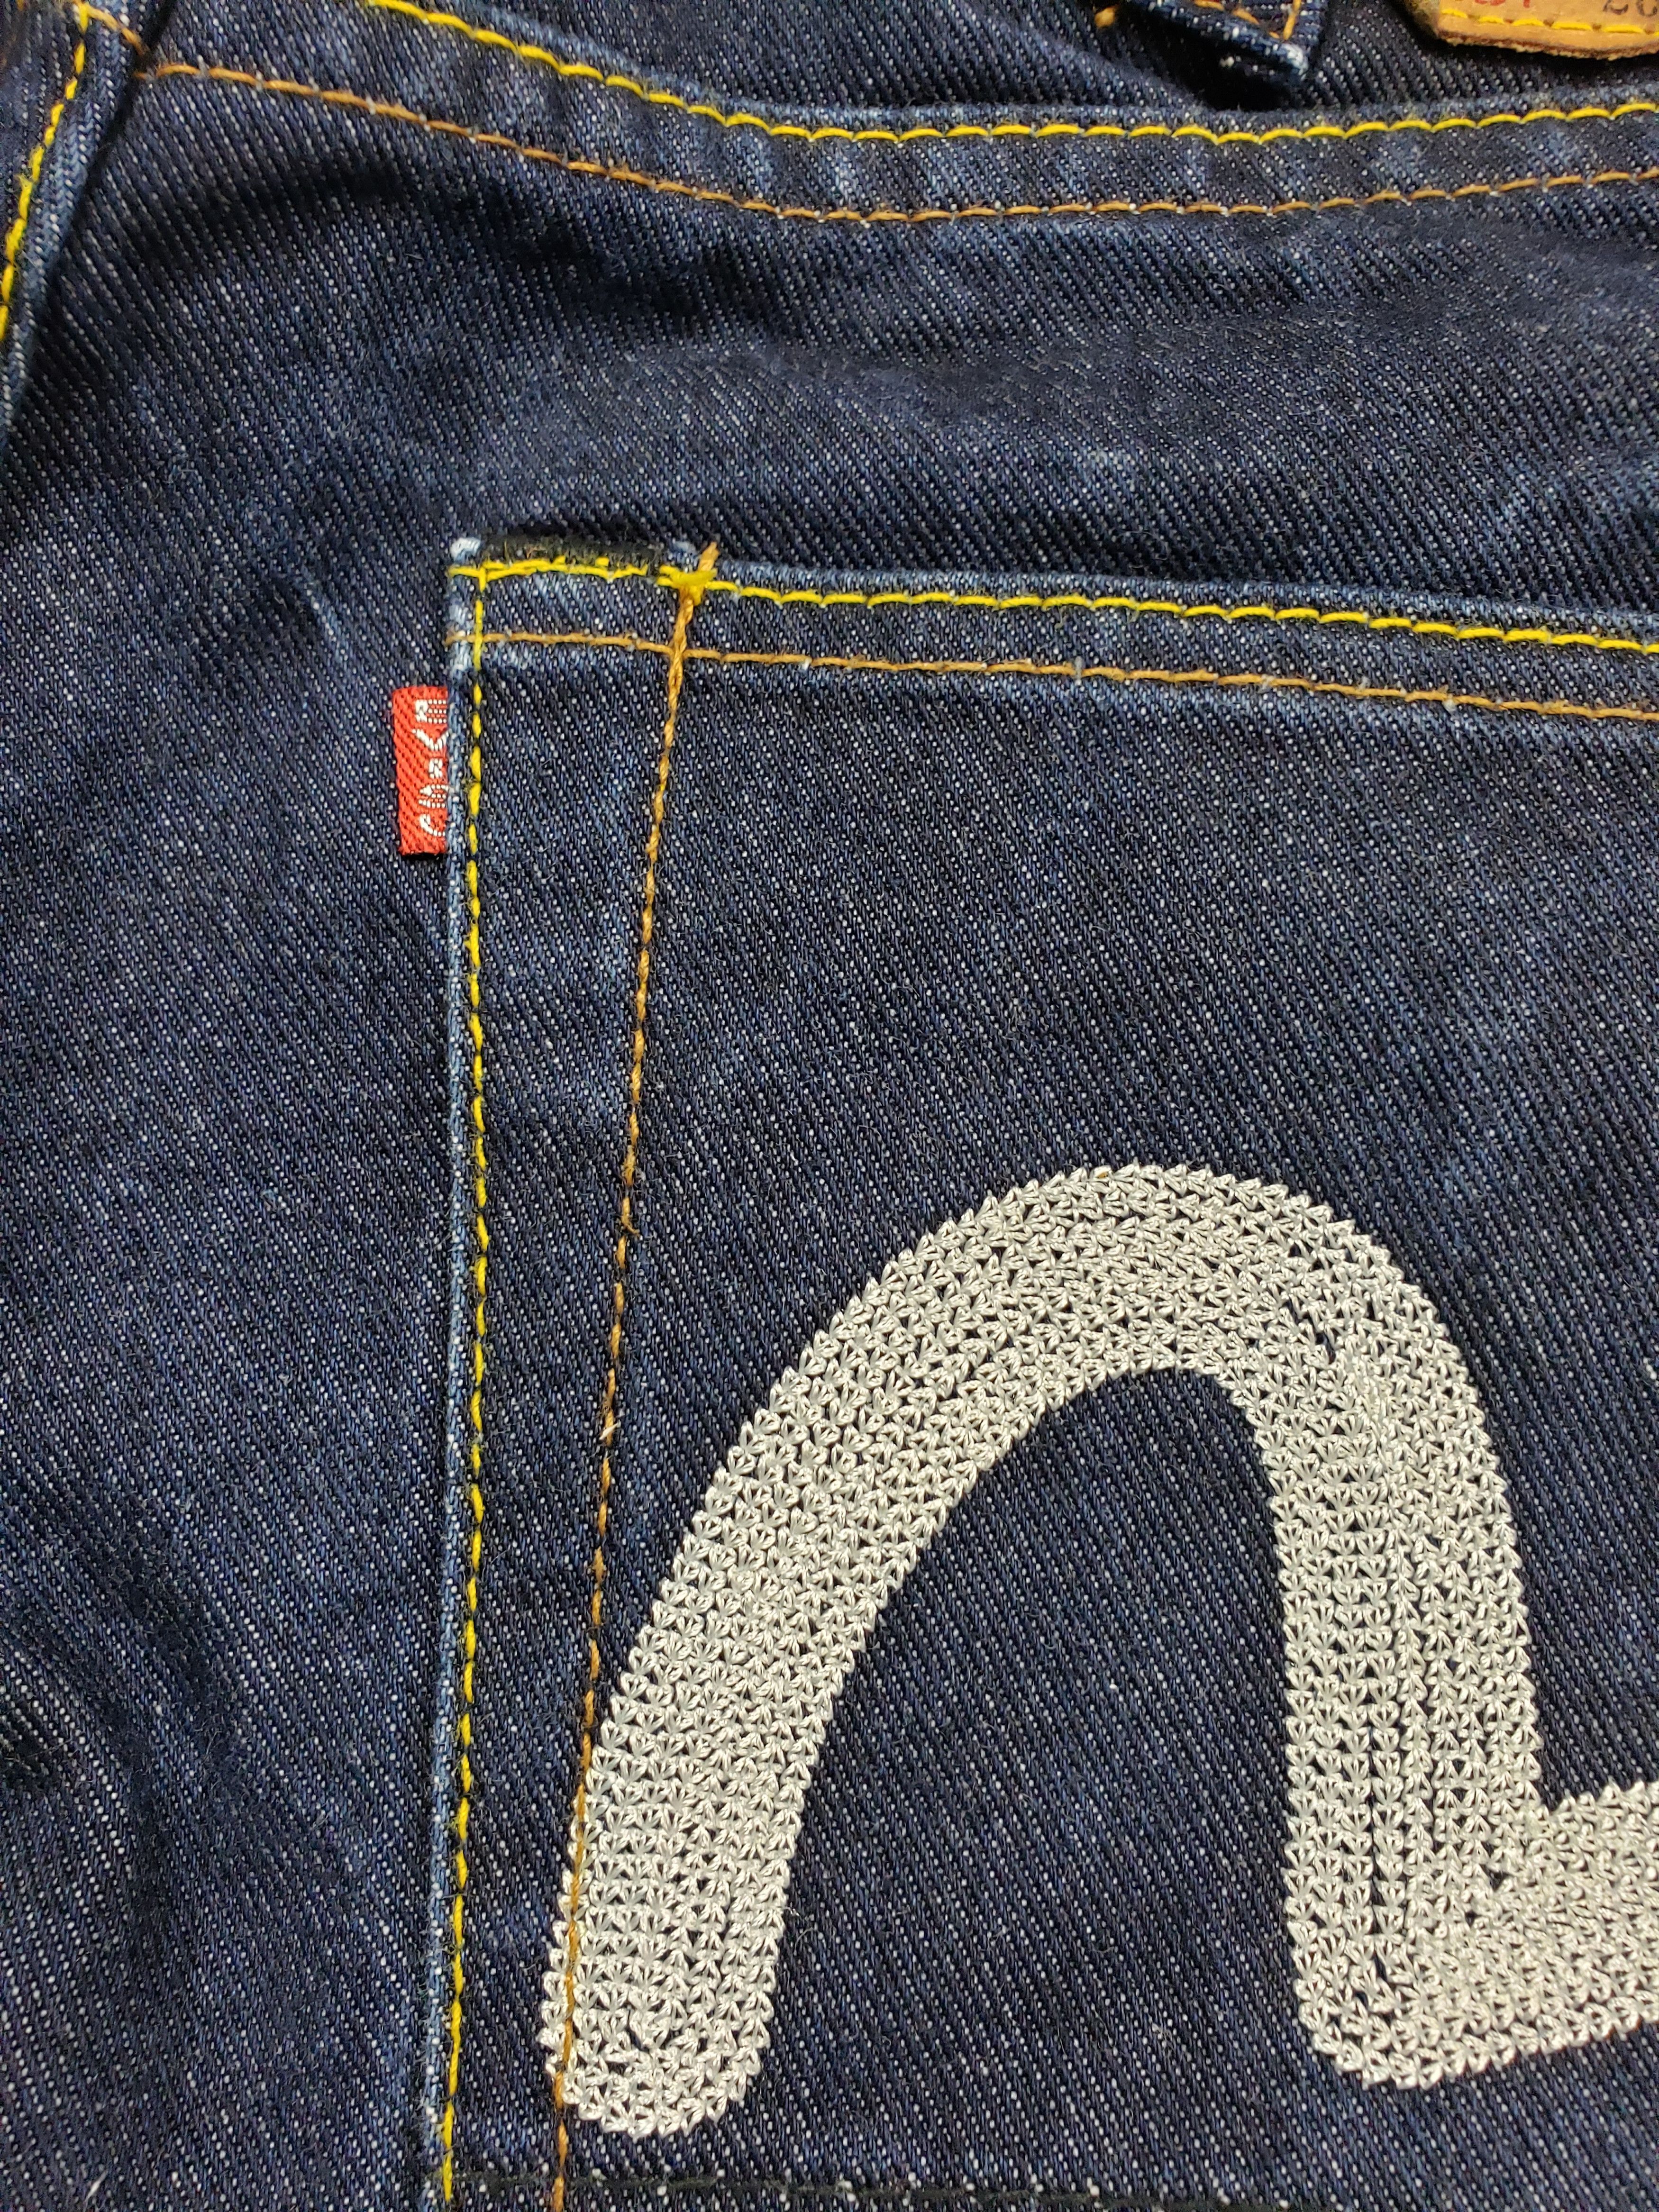 Evisu Evisu denim pants big logo jeans selvedge Size US 34 / EU 50 - 5 Thumbnail